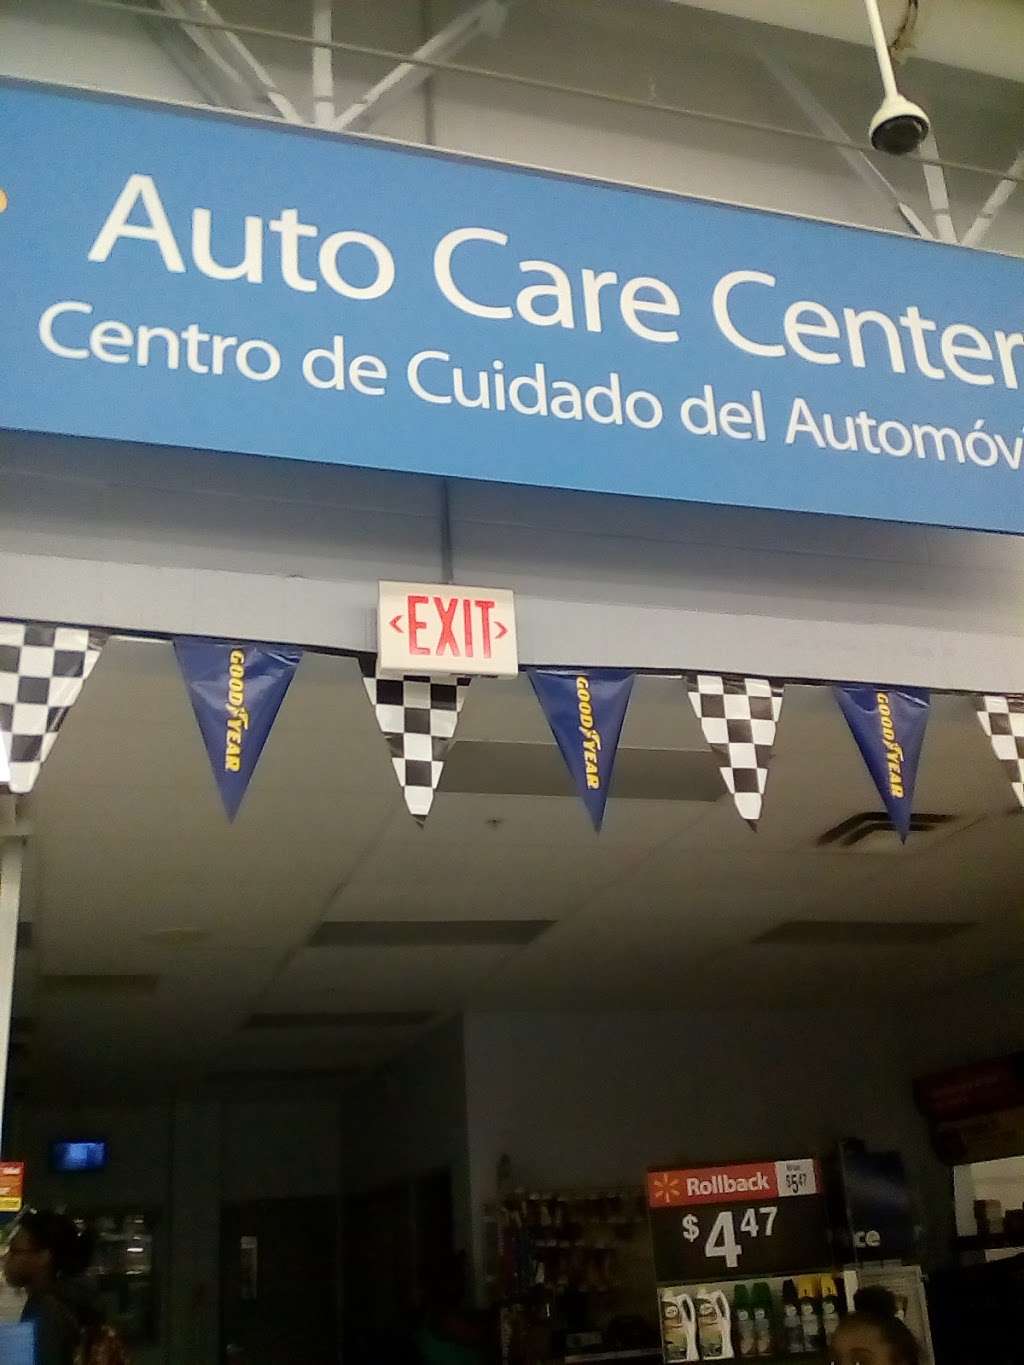 Walmart Auto Care Centers | 1731 E Ave. J, Lancaster, CA 93535 | Phone: (661) 945-9648